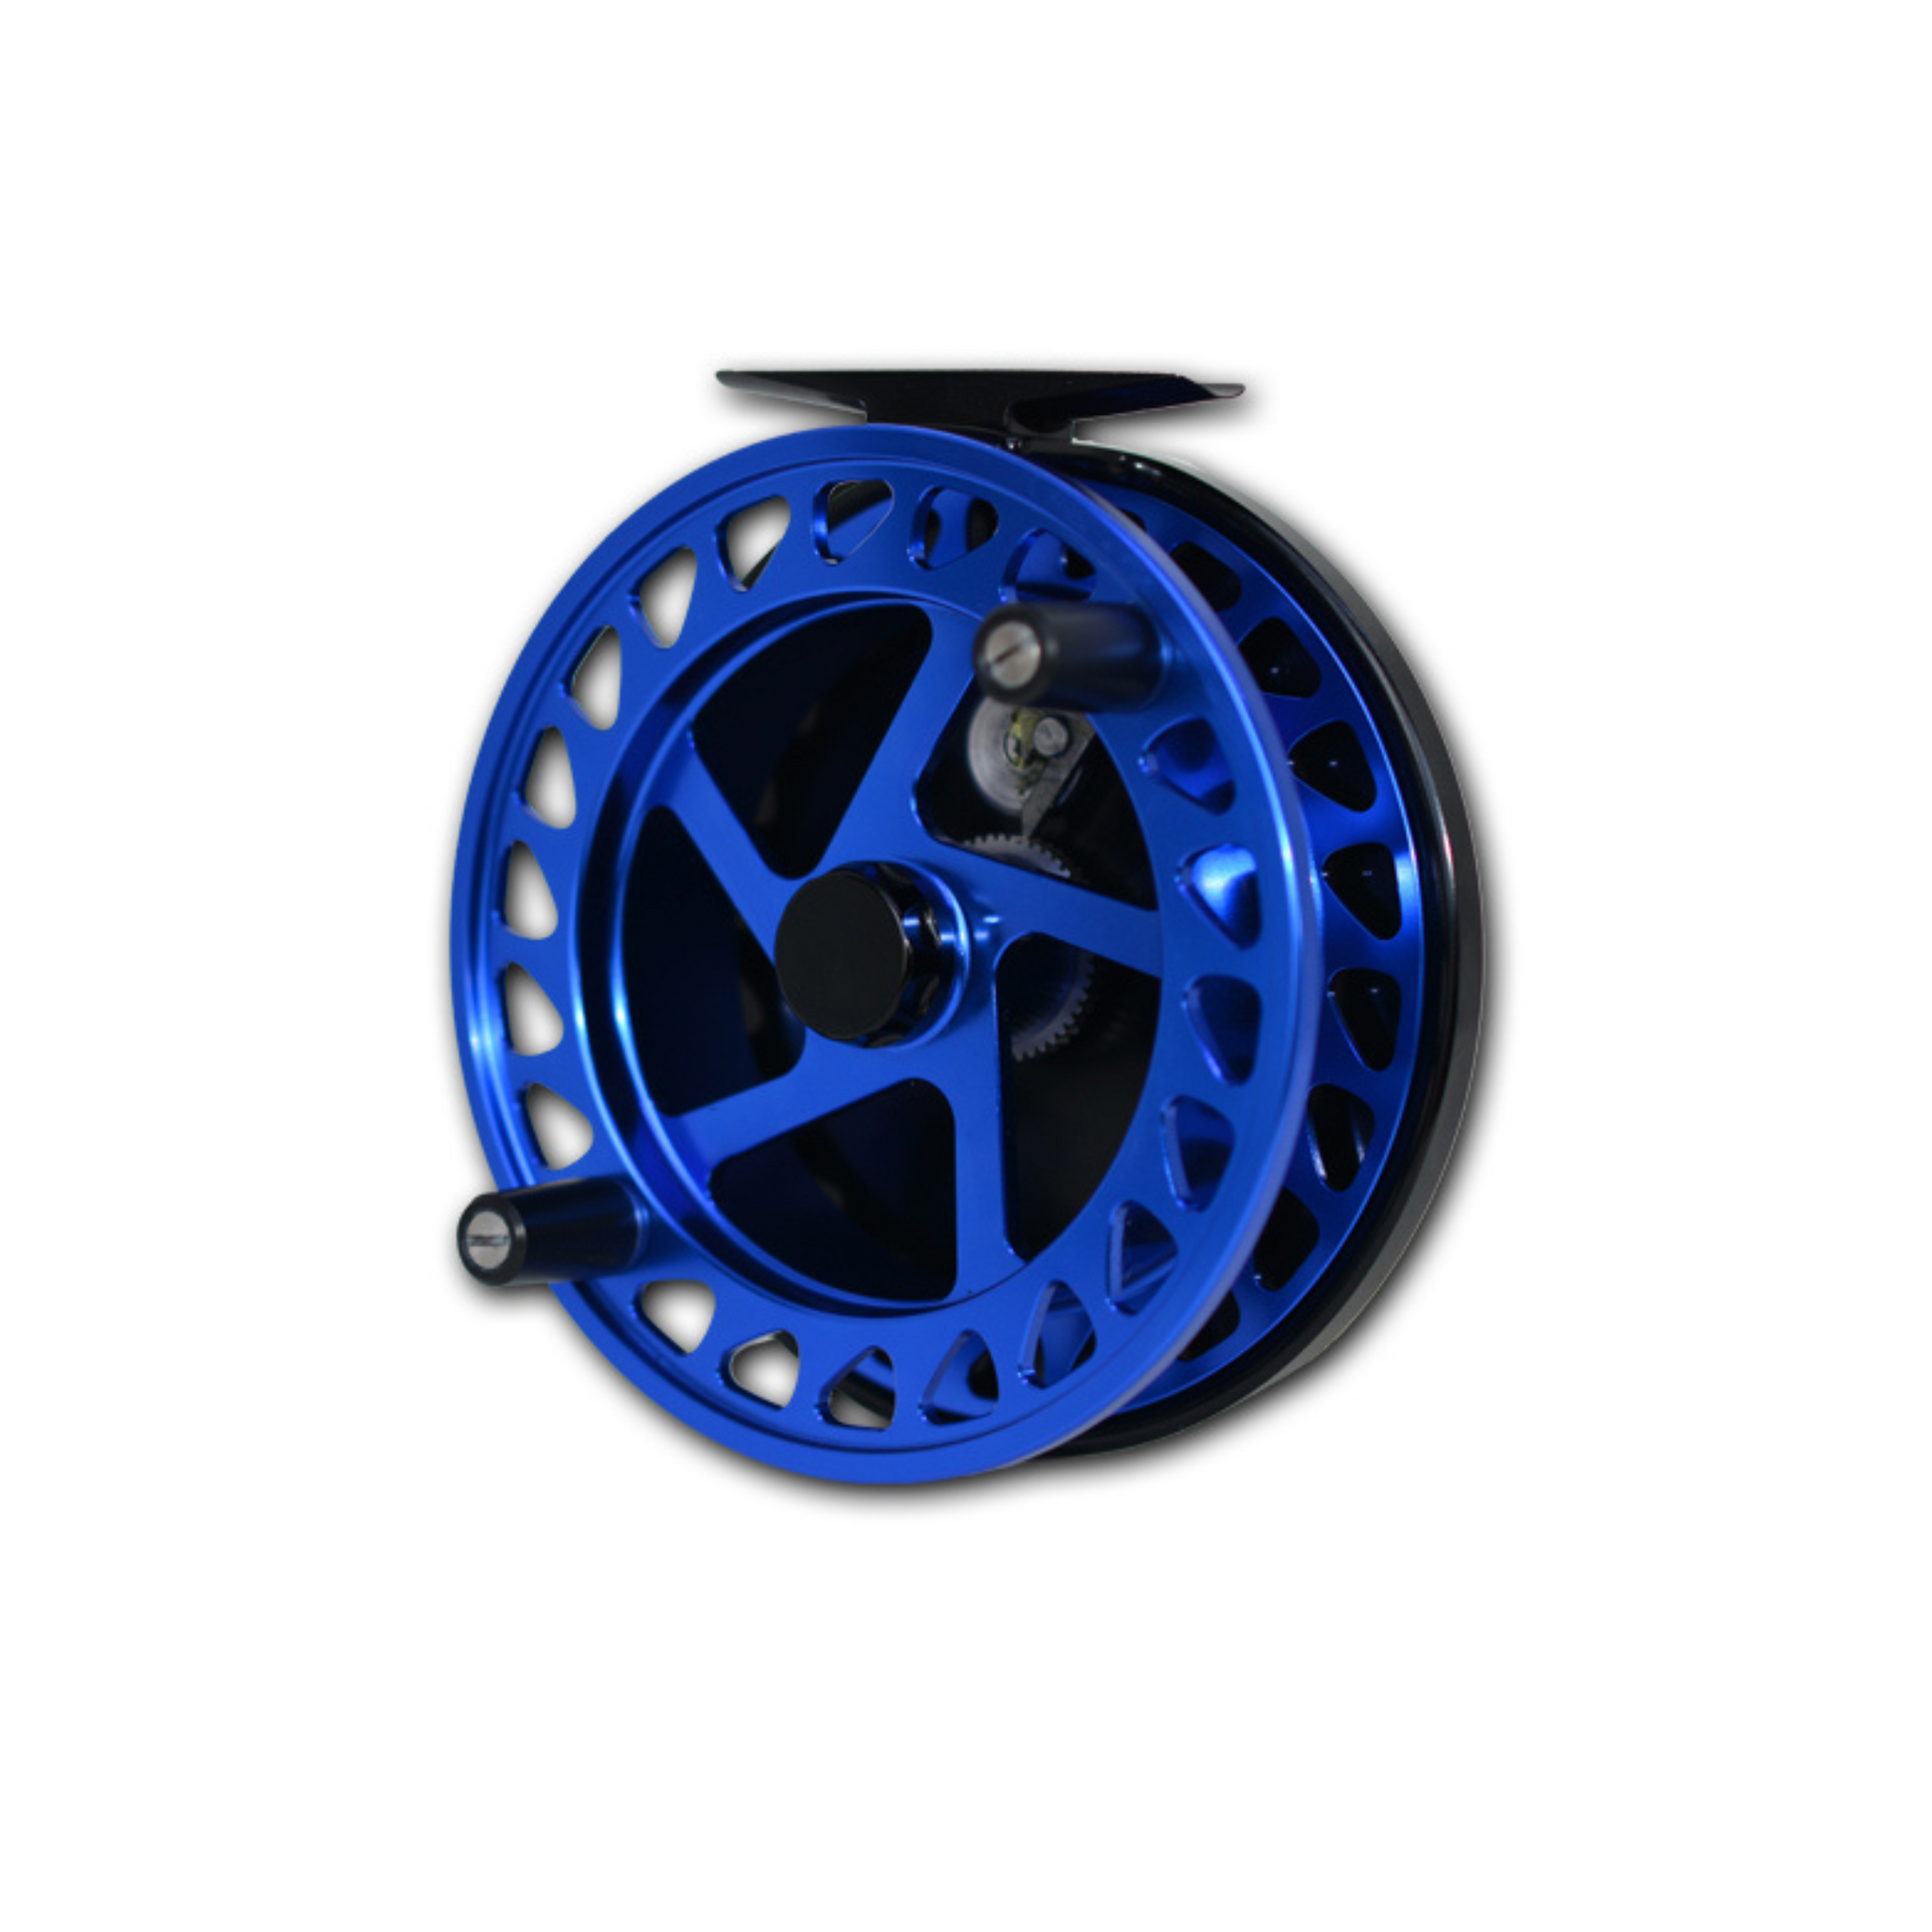 Raven 5 XL Helix Centerpin Float Reel - Blue/Black | Outdoor Sporting Goods Store